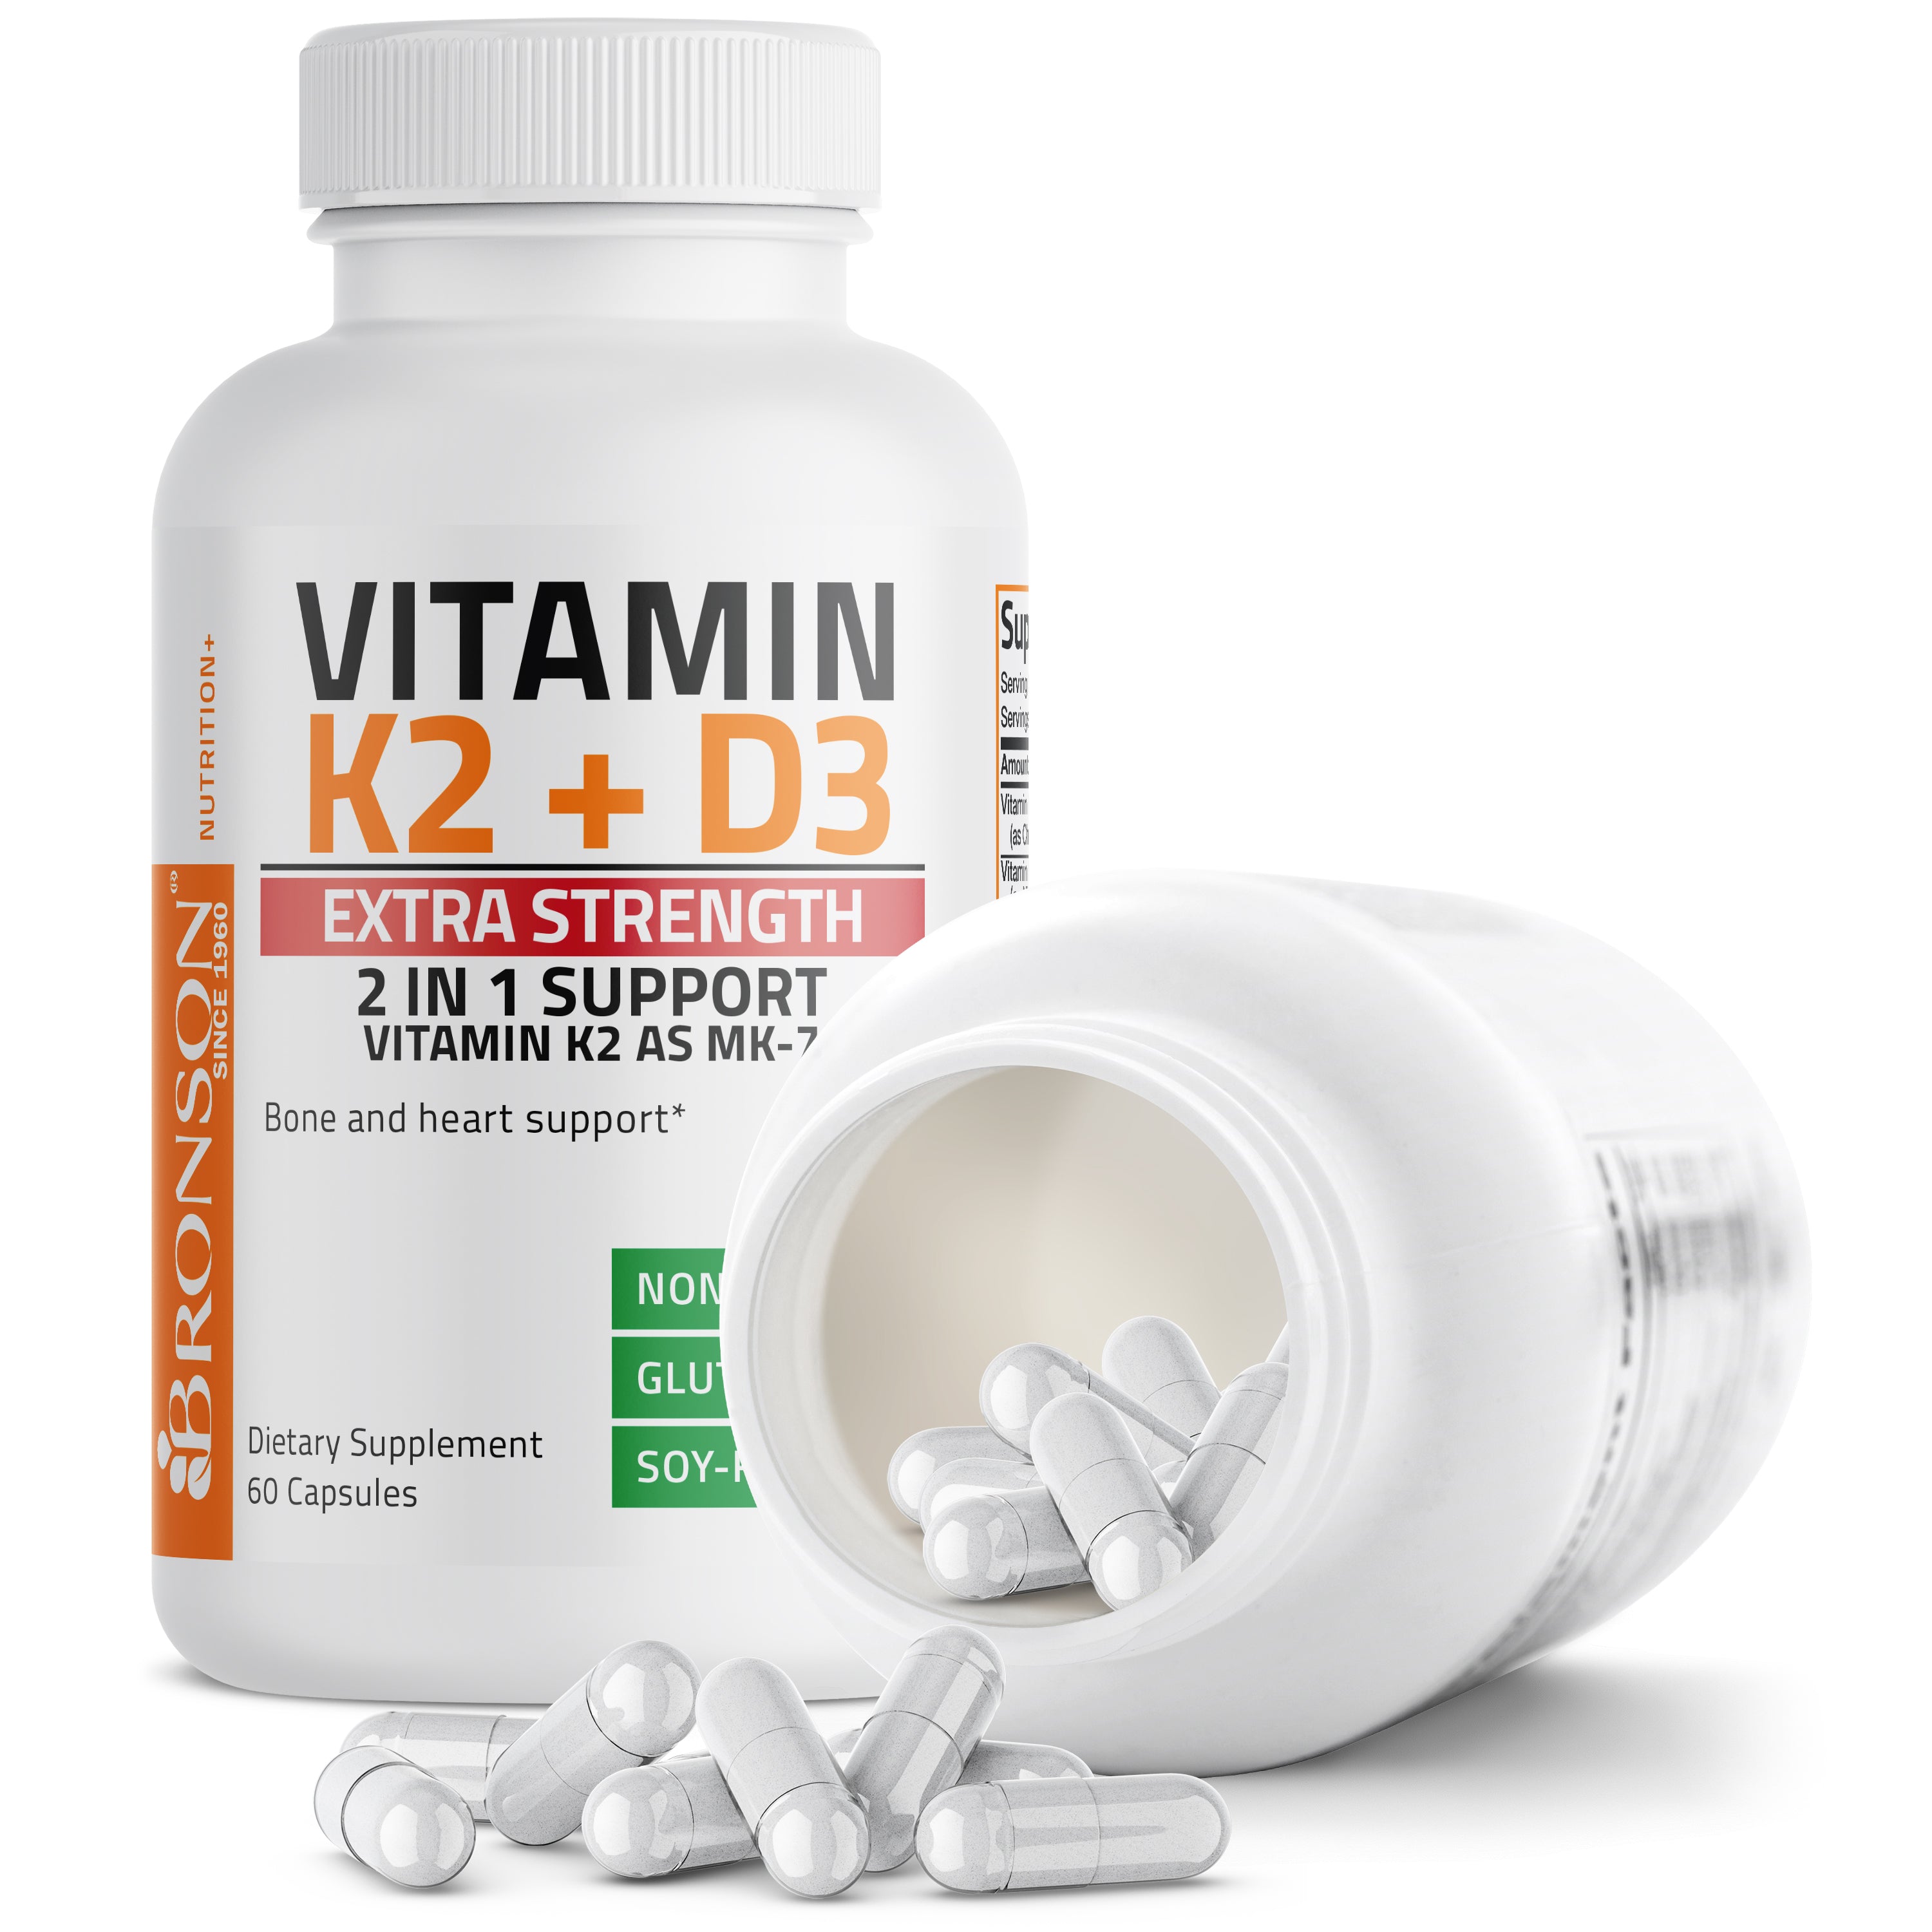 Vitamin K2 MK-7 Plus Vitamin D3 Extra Strength view 4 of 12